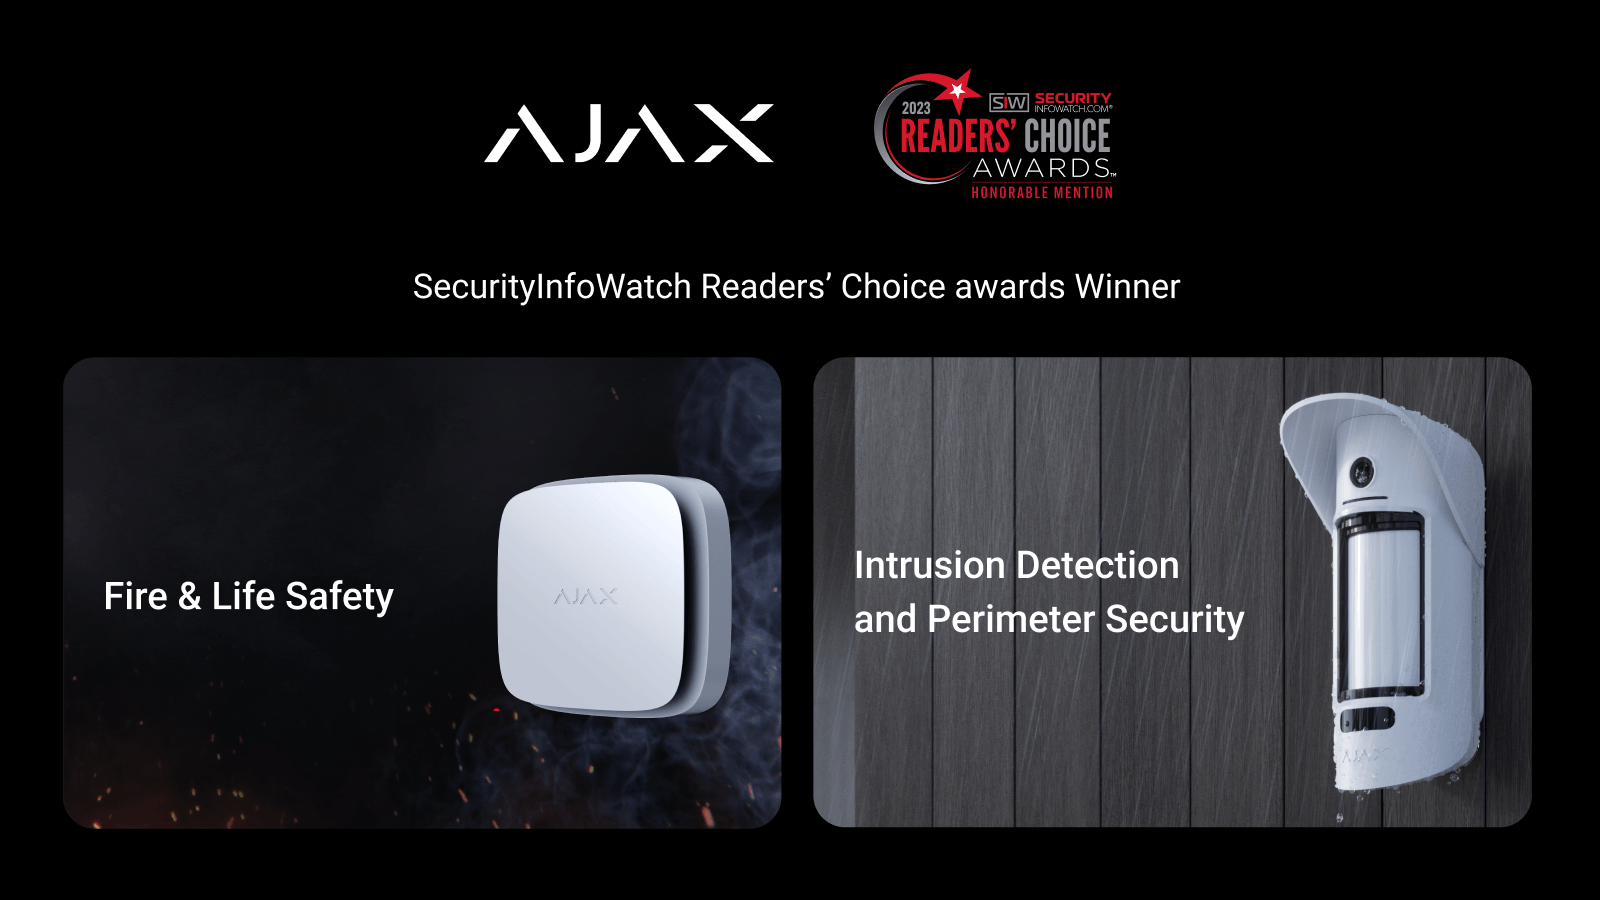 Ajax Systems wint 2 categorieën bij de SecurityInfoWatch.com Readers' Choice Awards in de VS